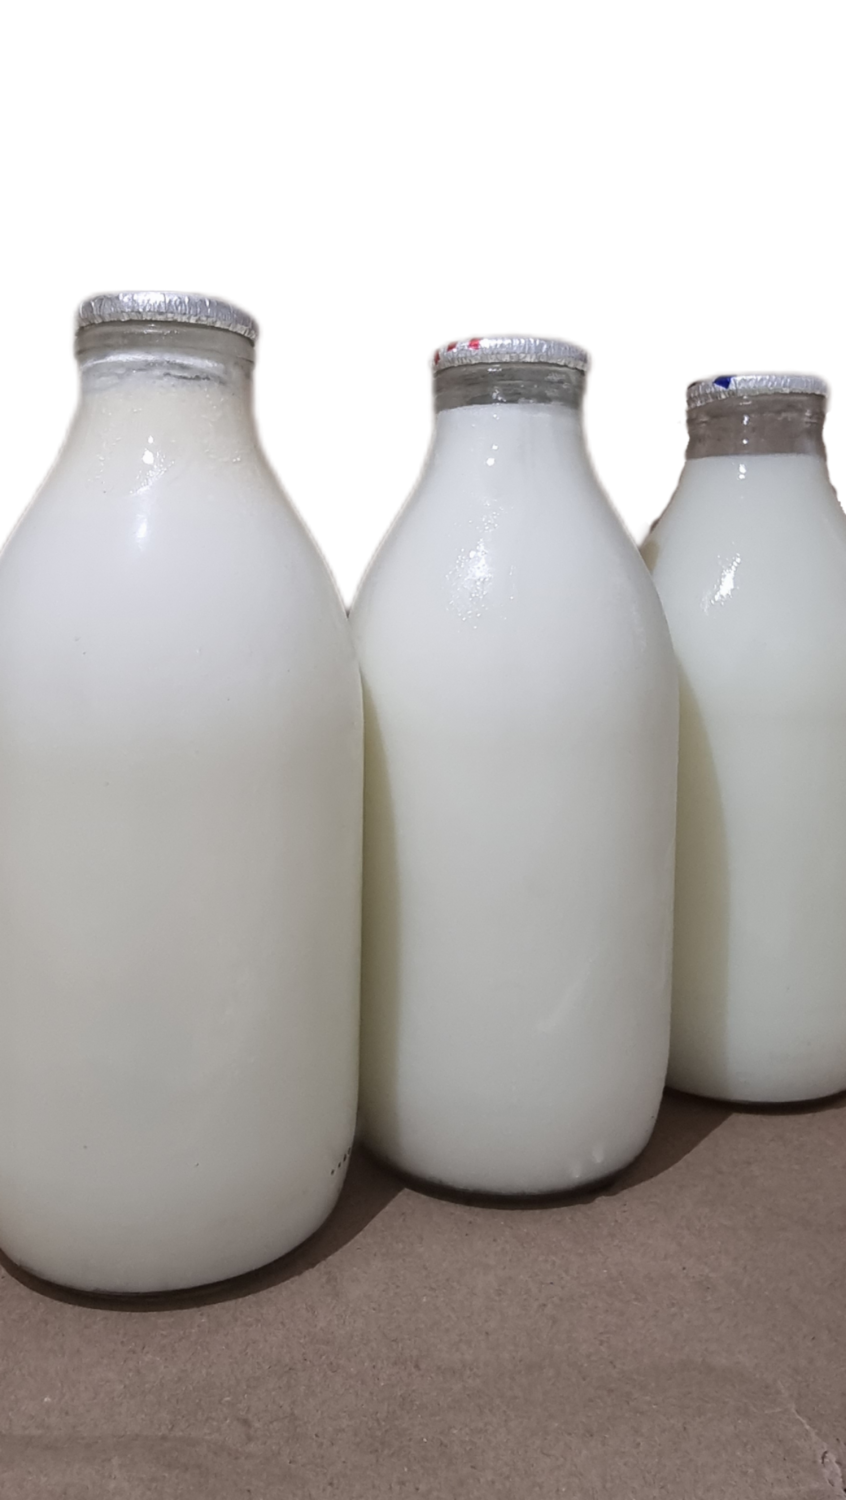 4 x Milk bundle (25p saved)